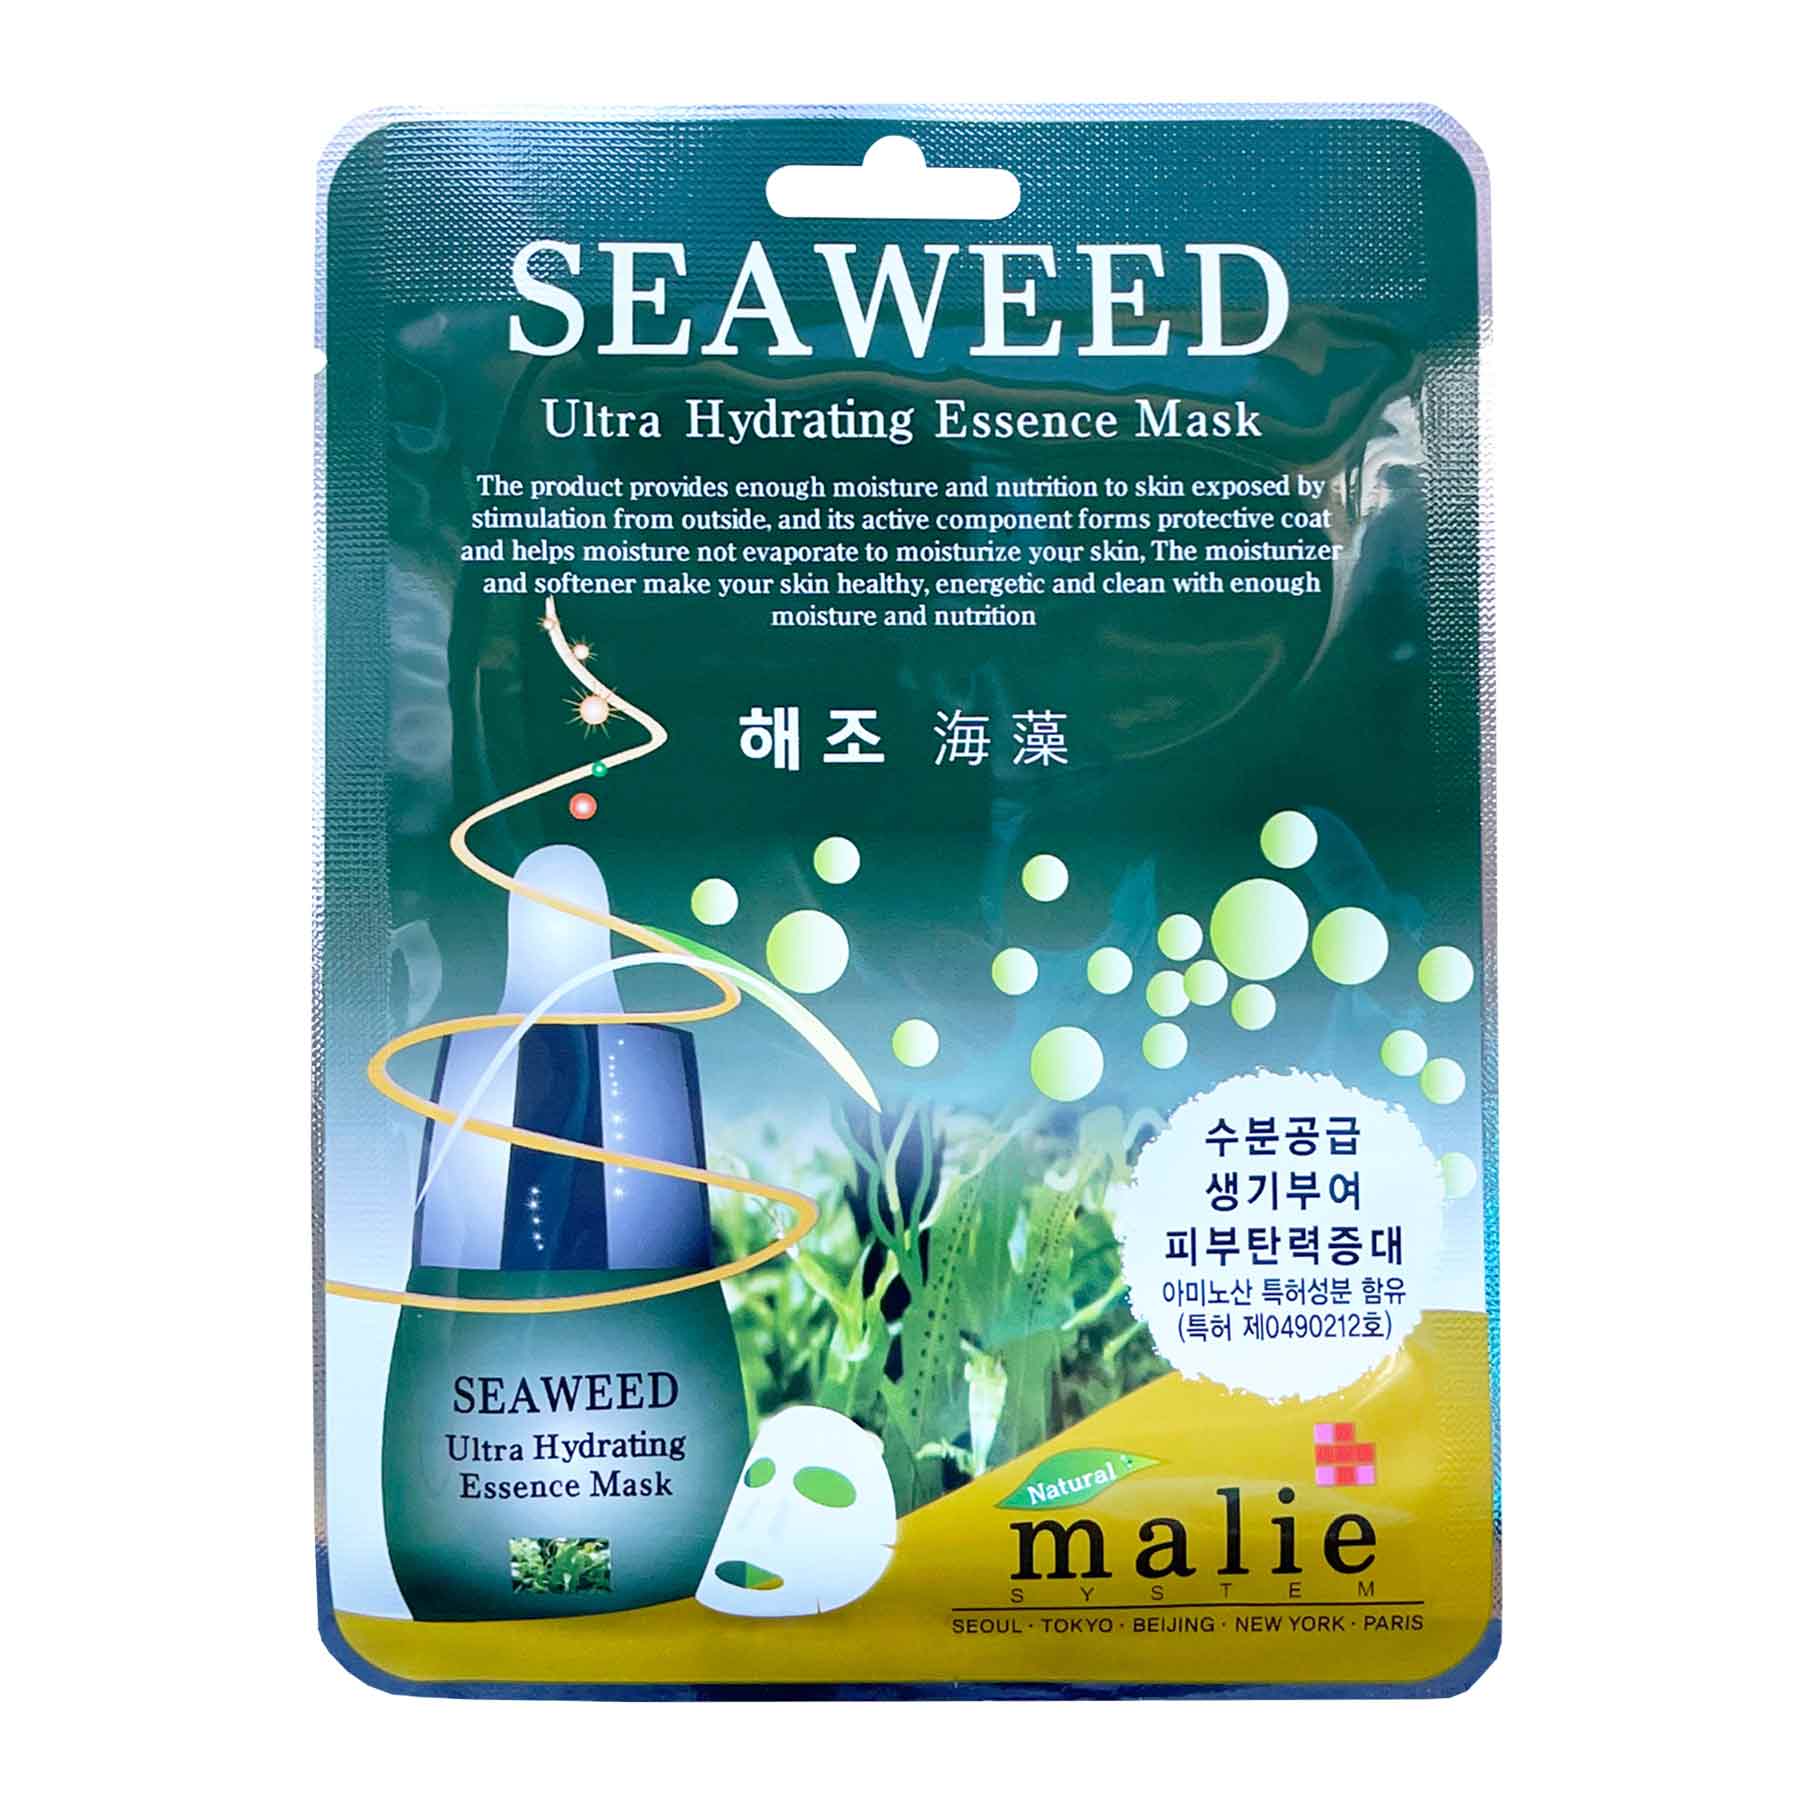 Seaweed Ultra Hydrating Essence Mask